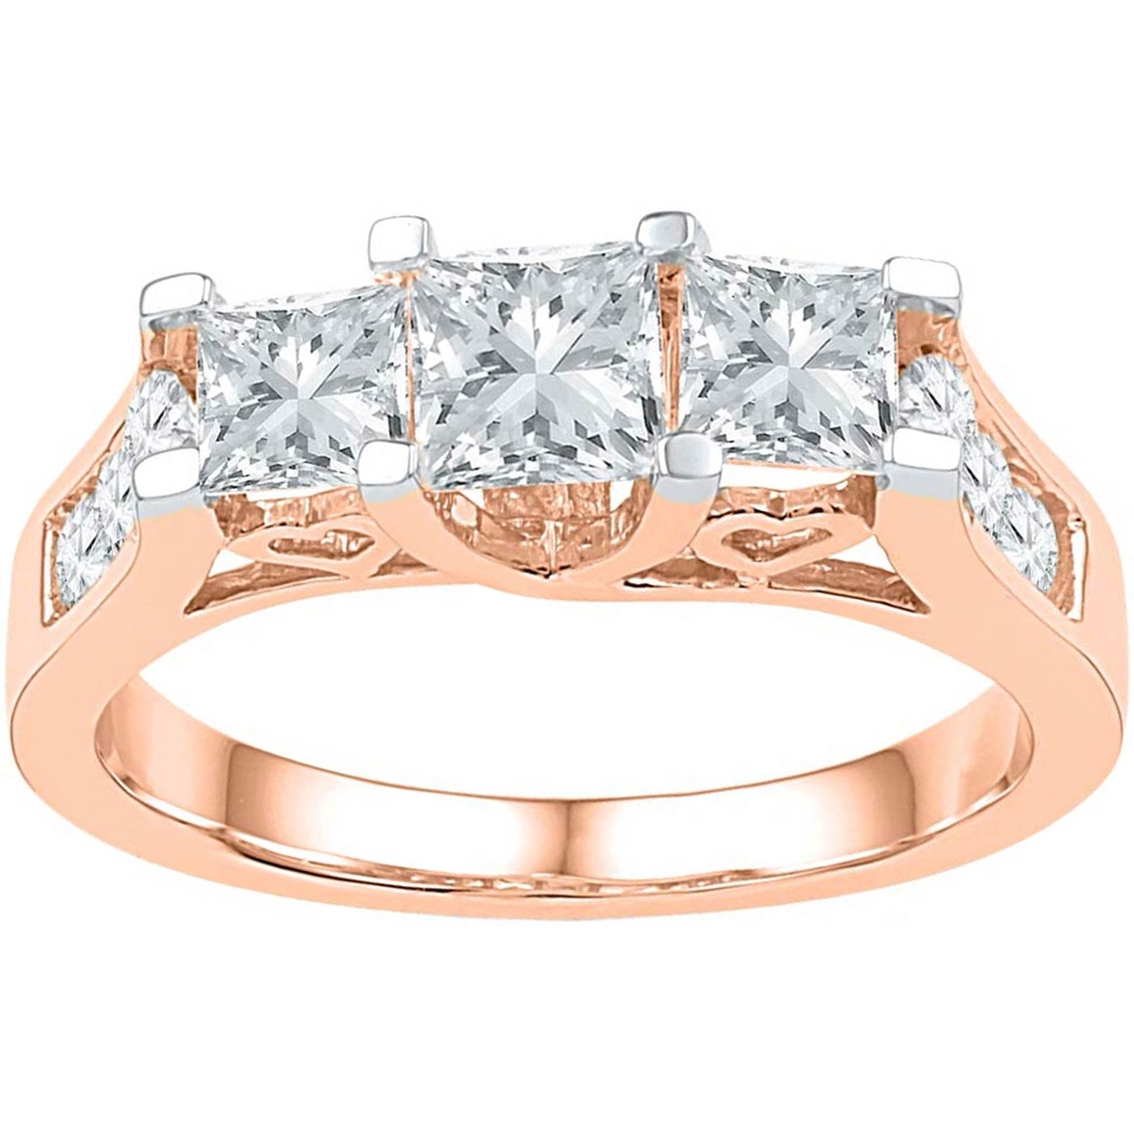 14K Rose Gold 1 1/2 CTW 3 Stone Princess Cut Diamond Engagement Ring